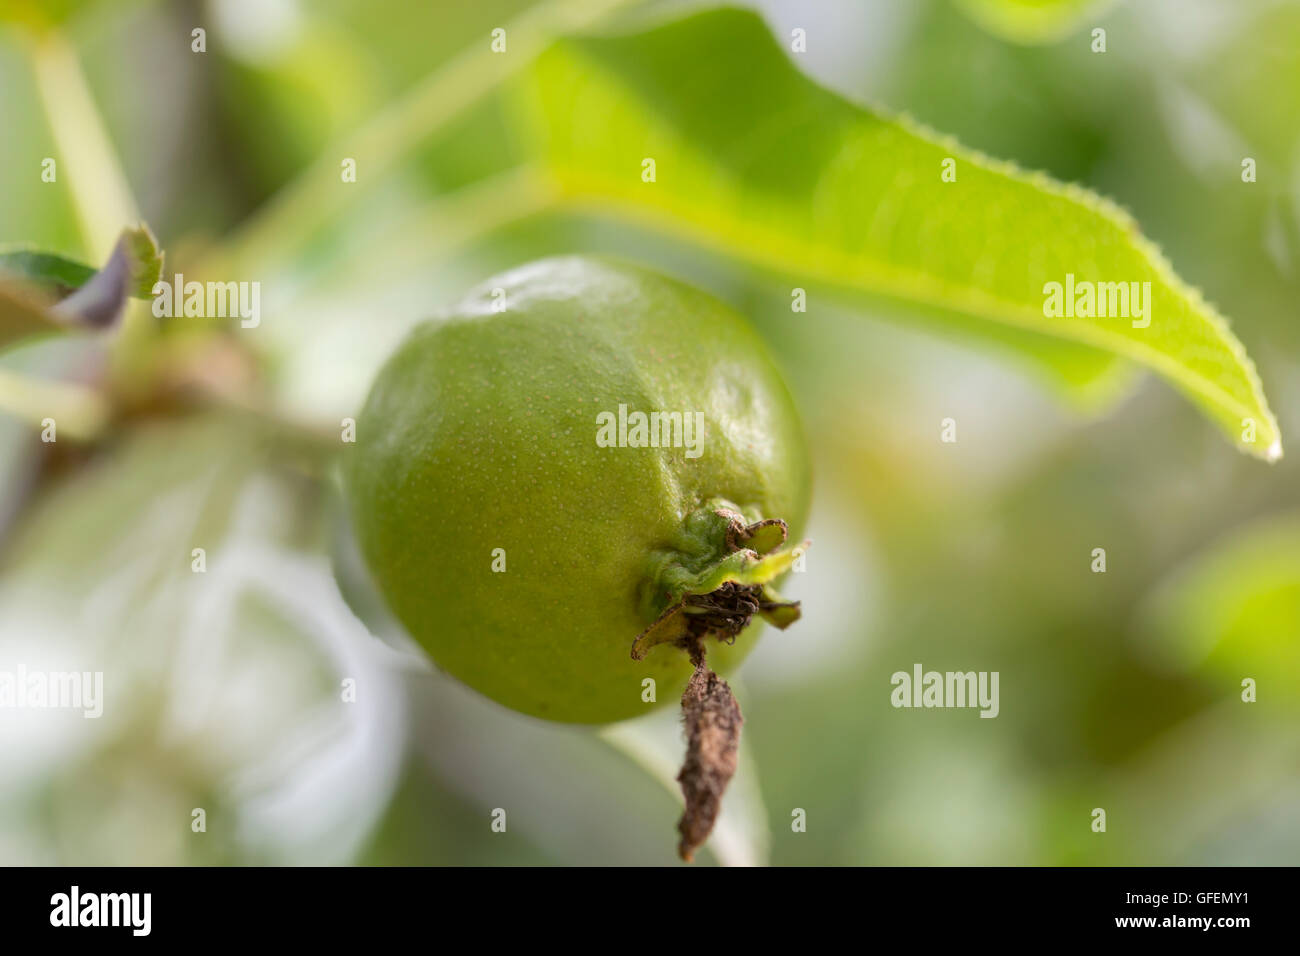 Ussurian Pear Close Up macro image. Stock Photo